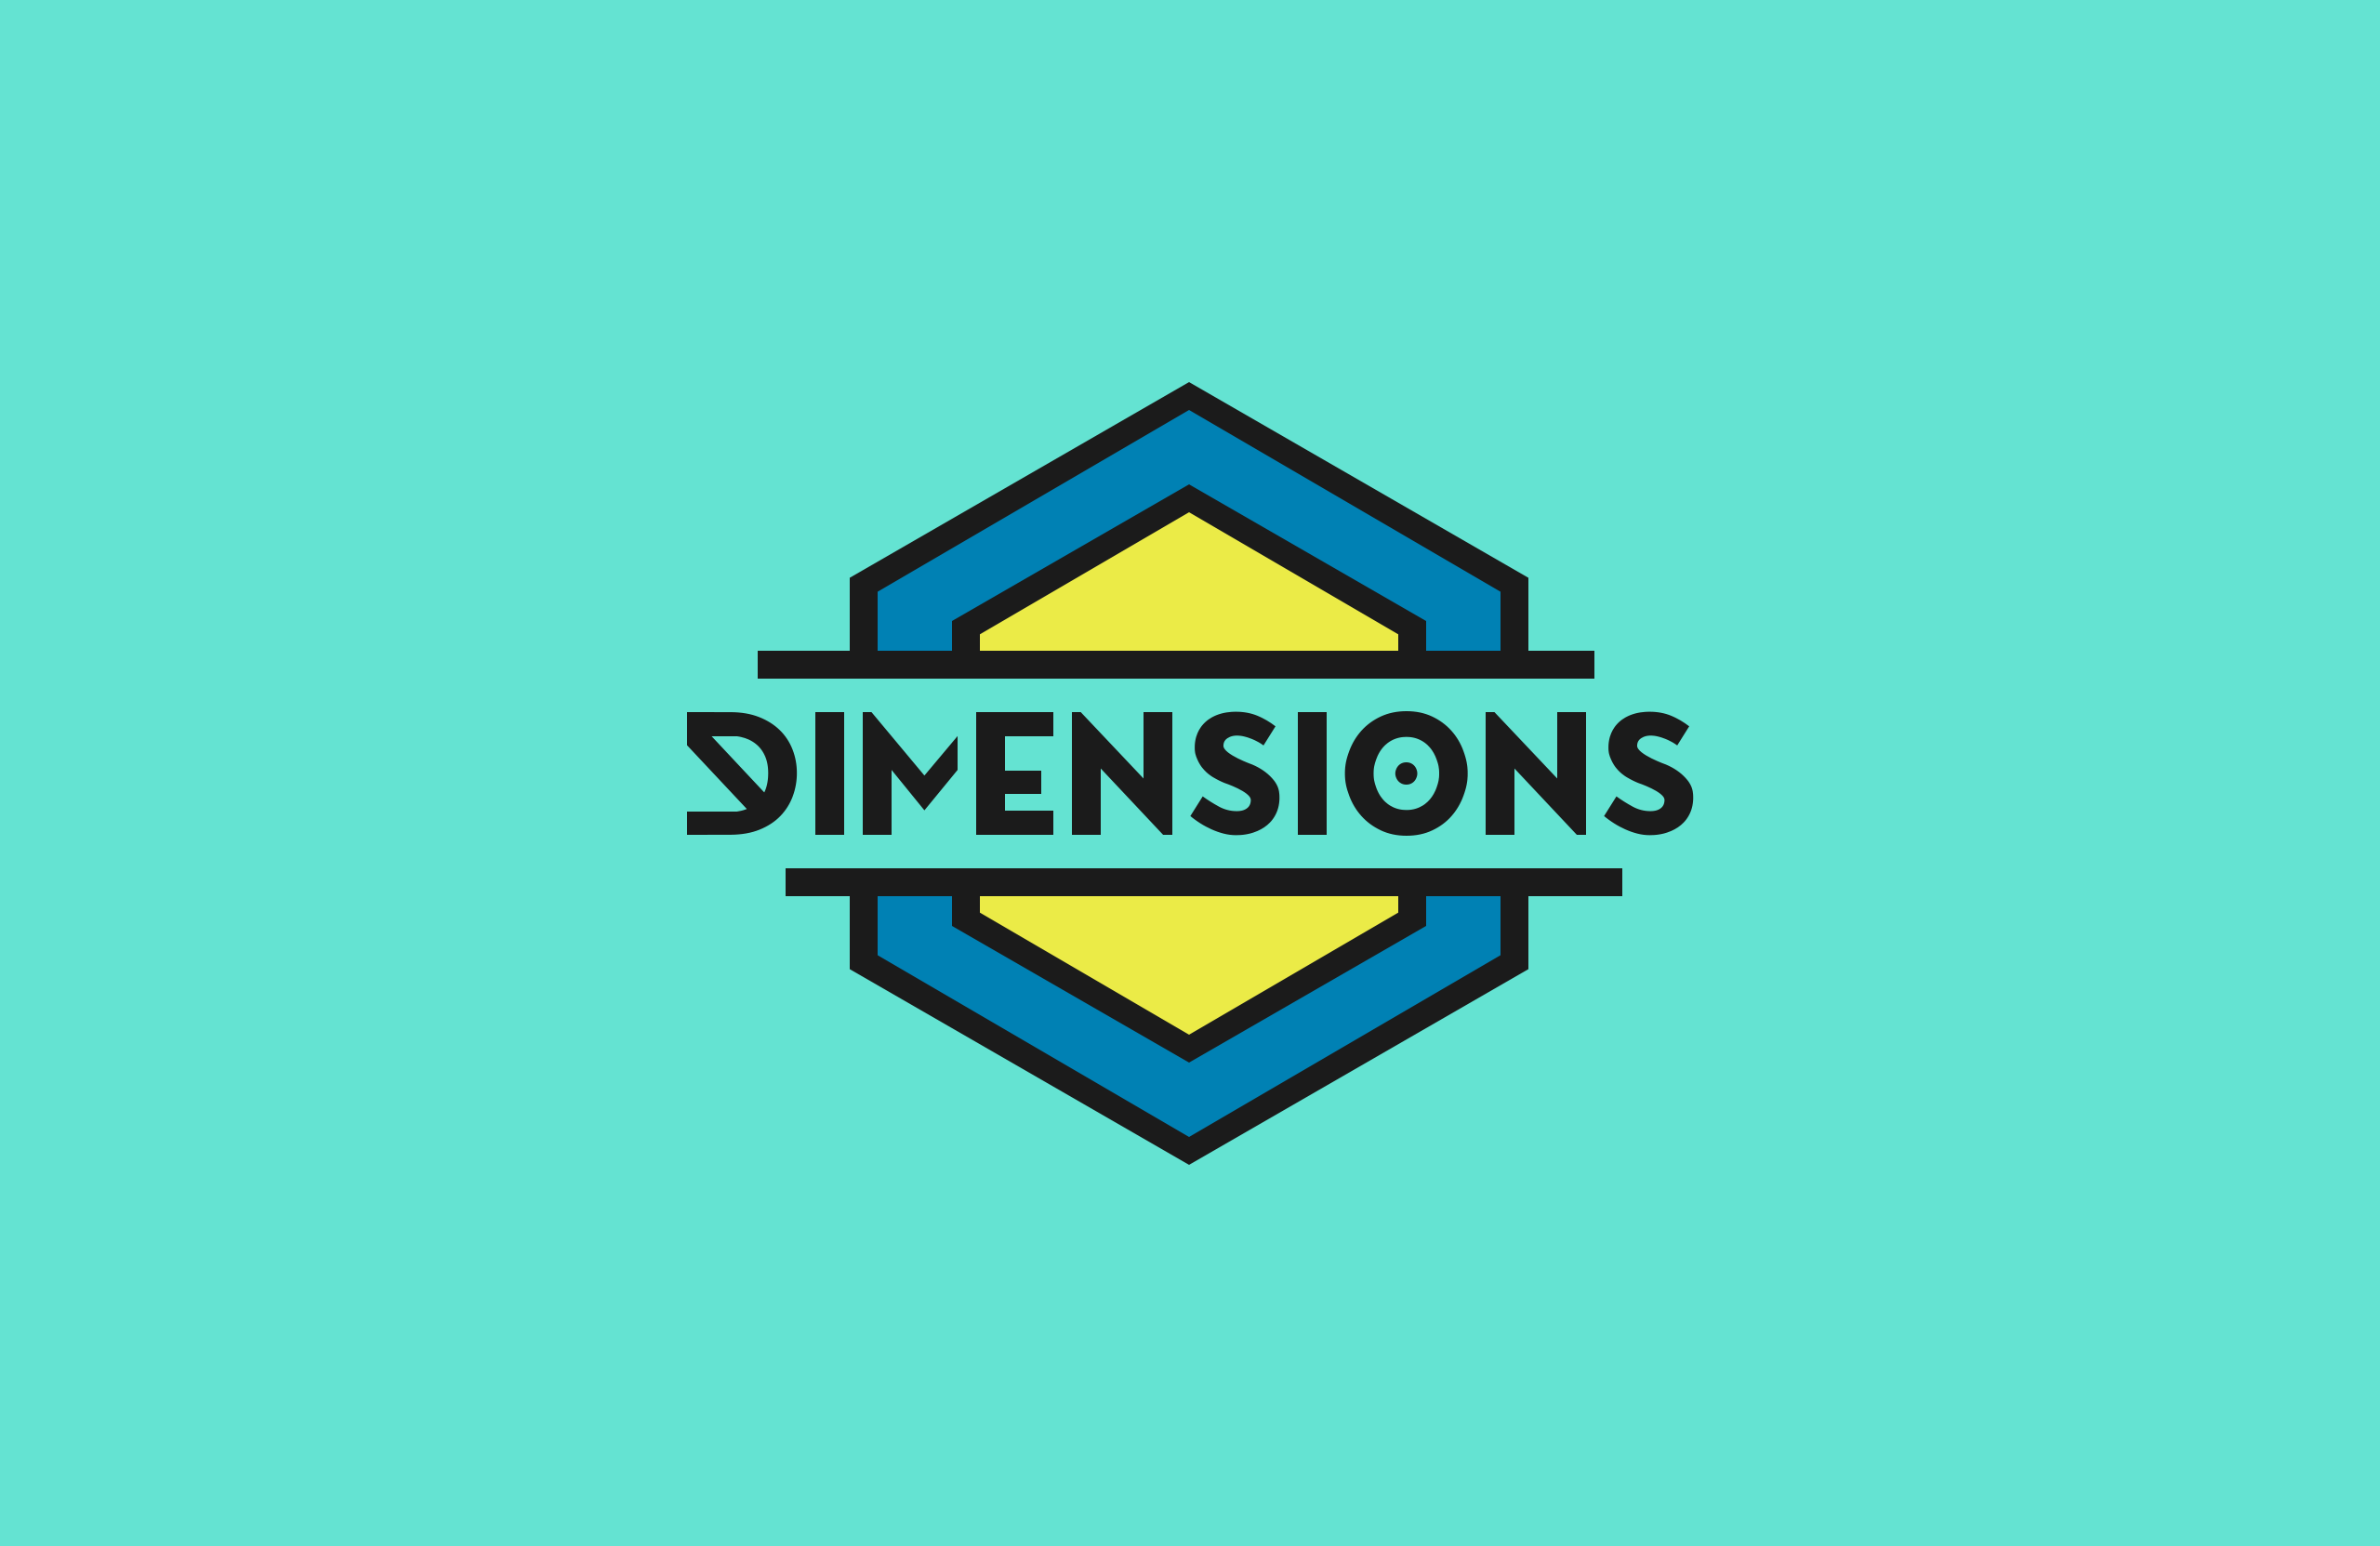 Dimensions Logo by by Garett Southerton, Creative Brand Strategist of Garett® based in Long Island, New York